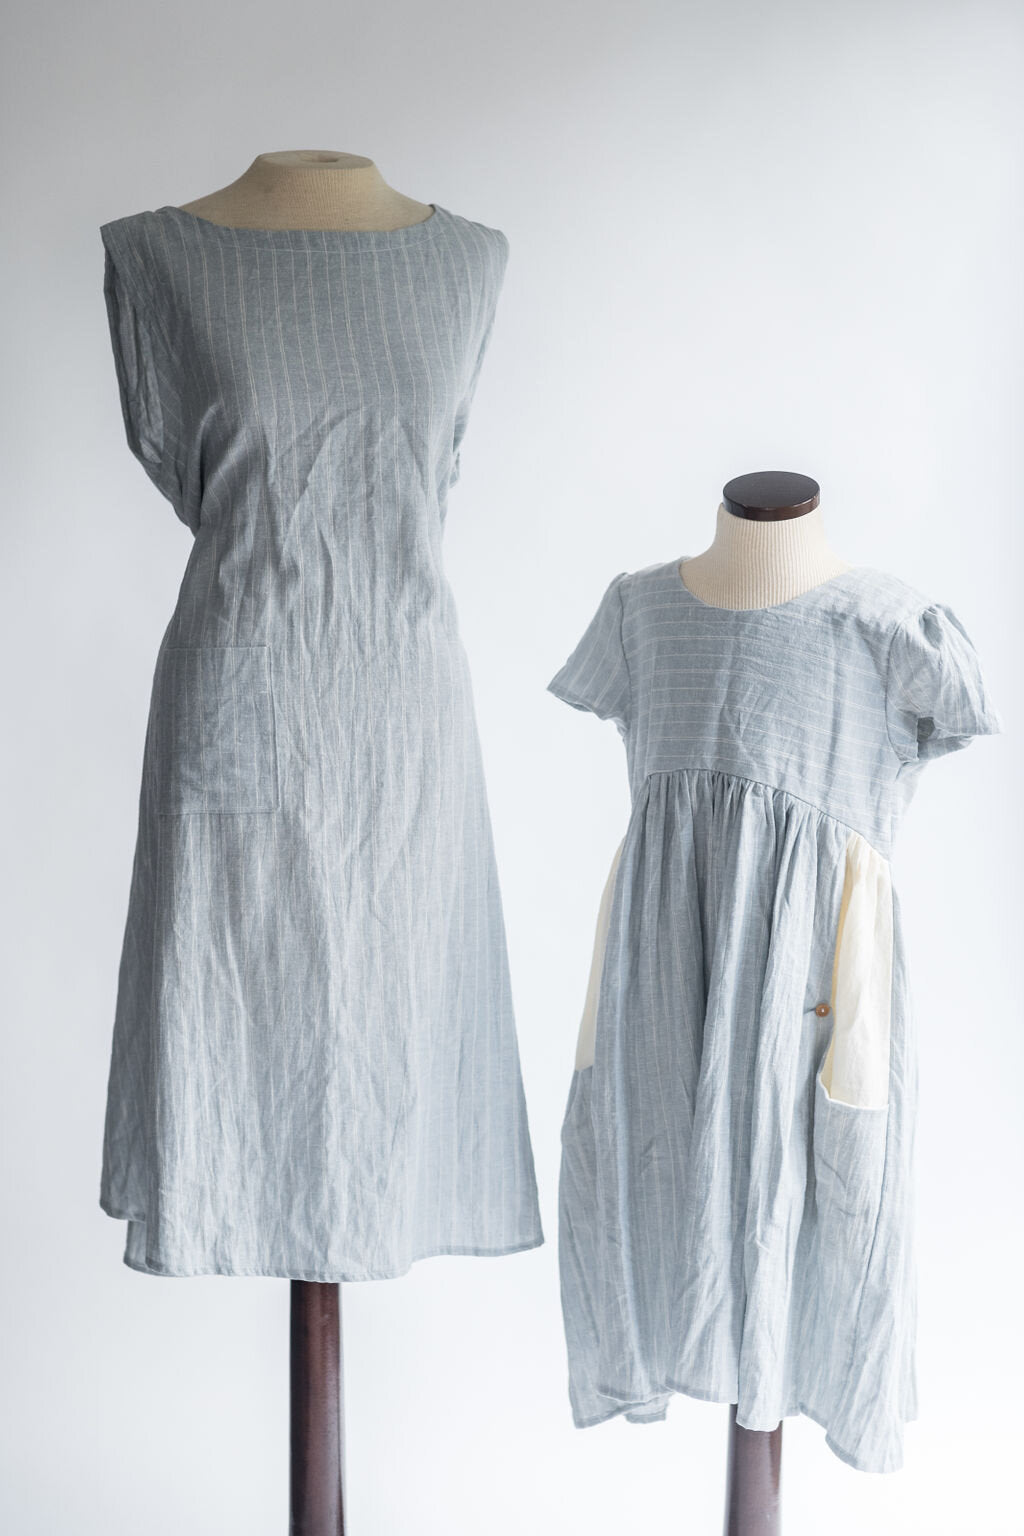 The Children's Linen Dress on a Mannequin